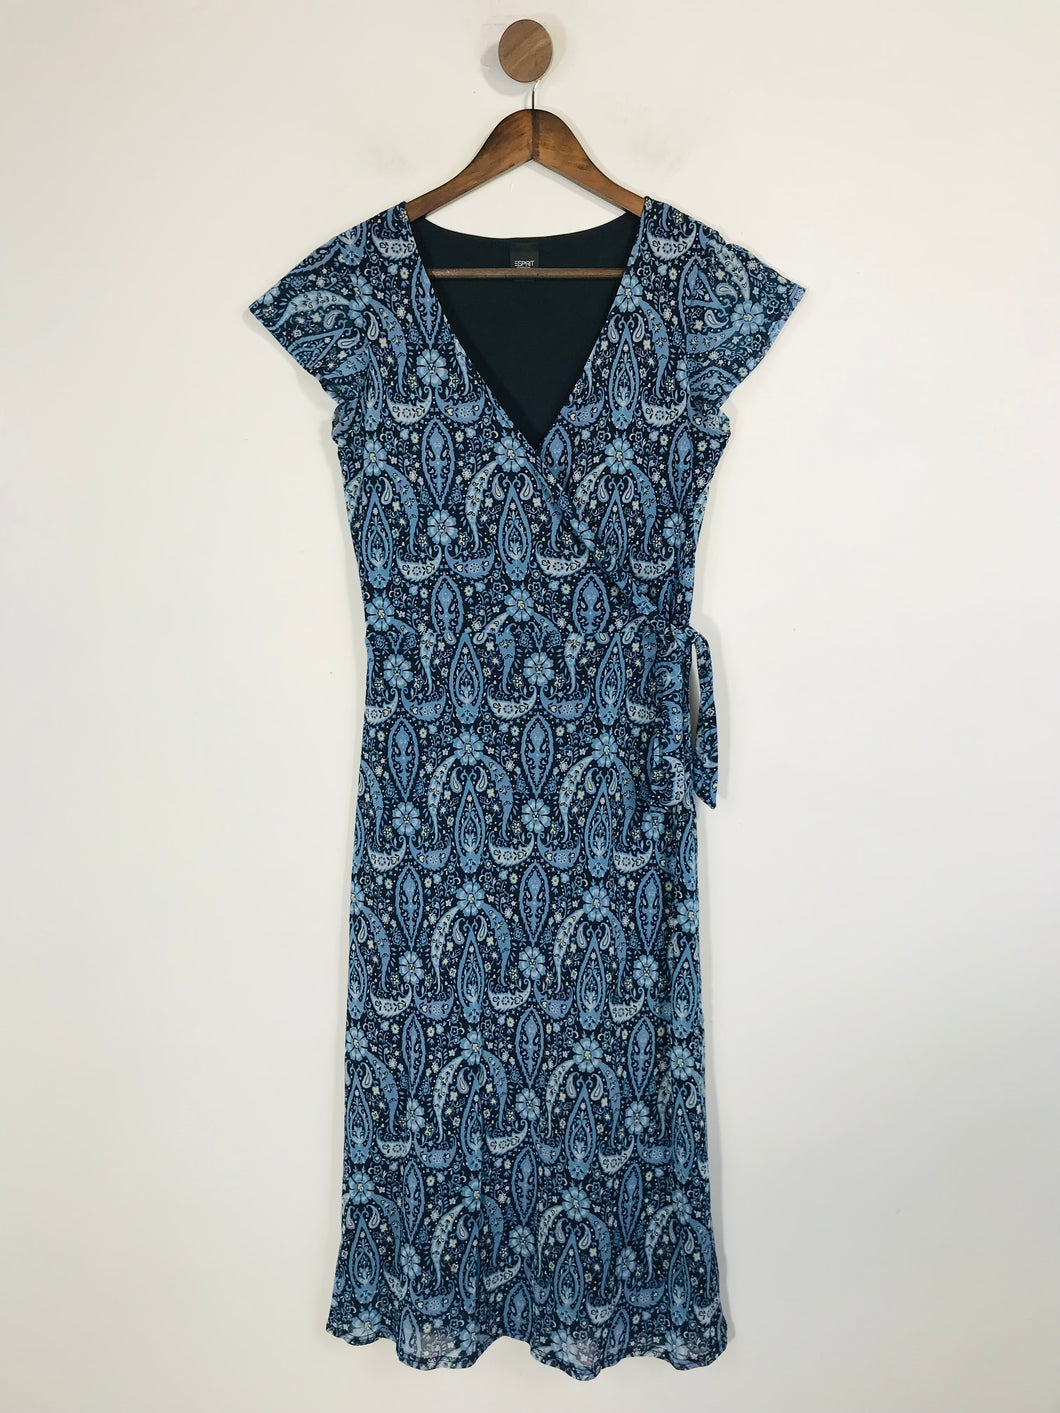 Esprit Women's Paisley Print Sheath Dress | M UK10-12 | Blue